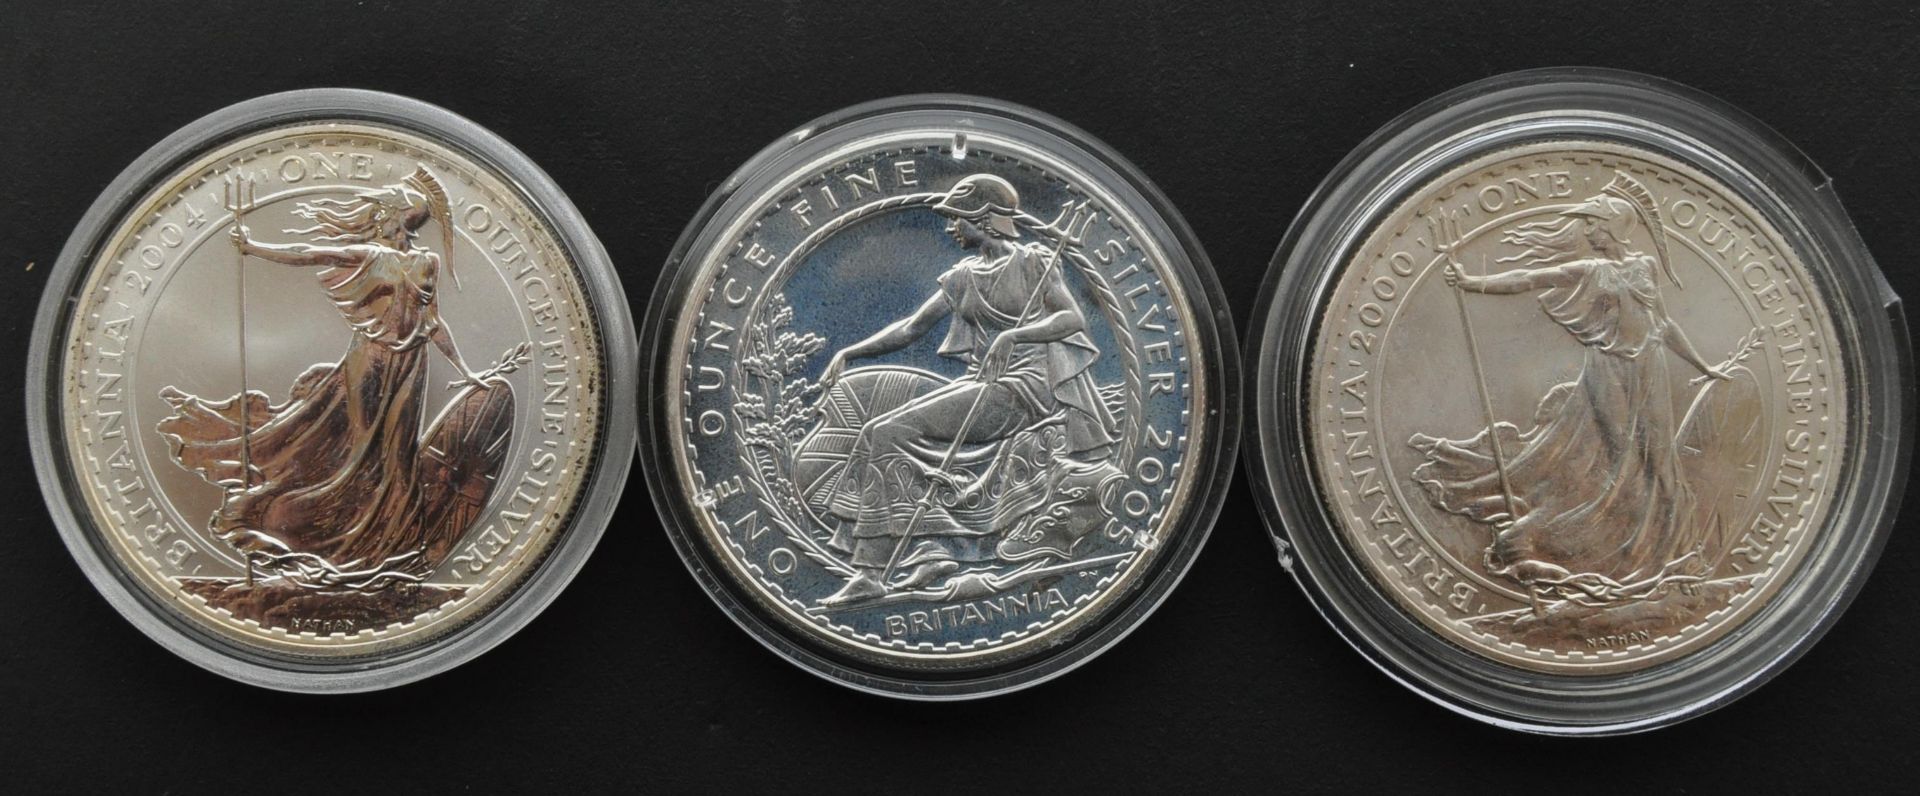 UNITED KINGDOM. THREE 1OZ 999 SILVER £2 BRITANNIA BULLIONS COINS - Image 2 of 2